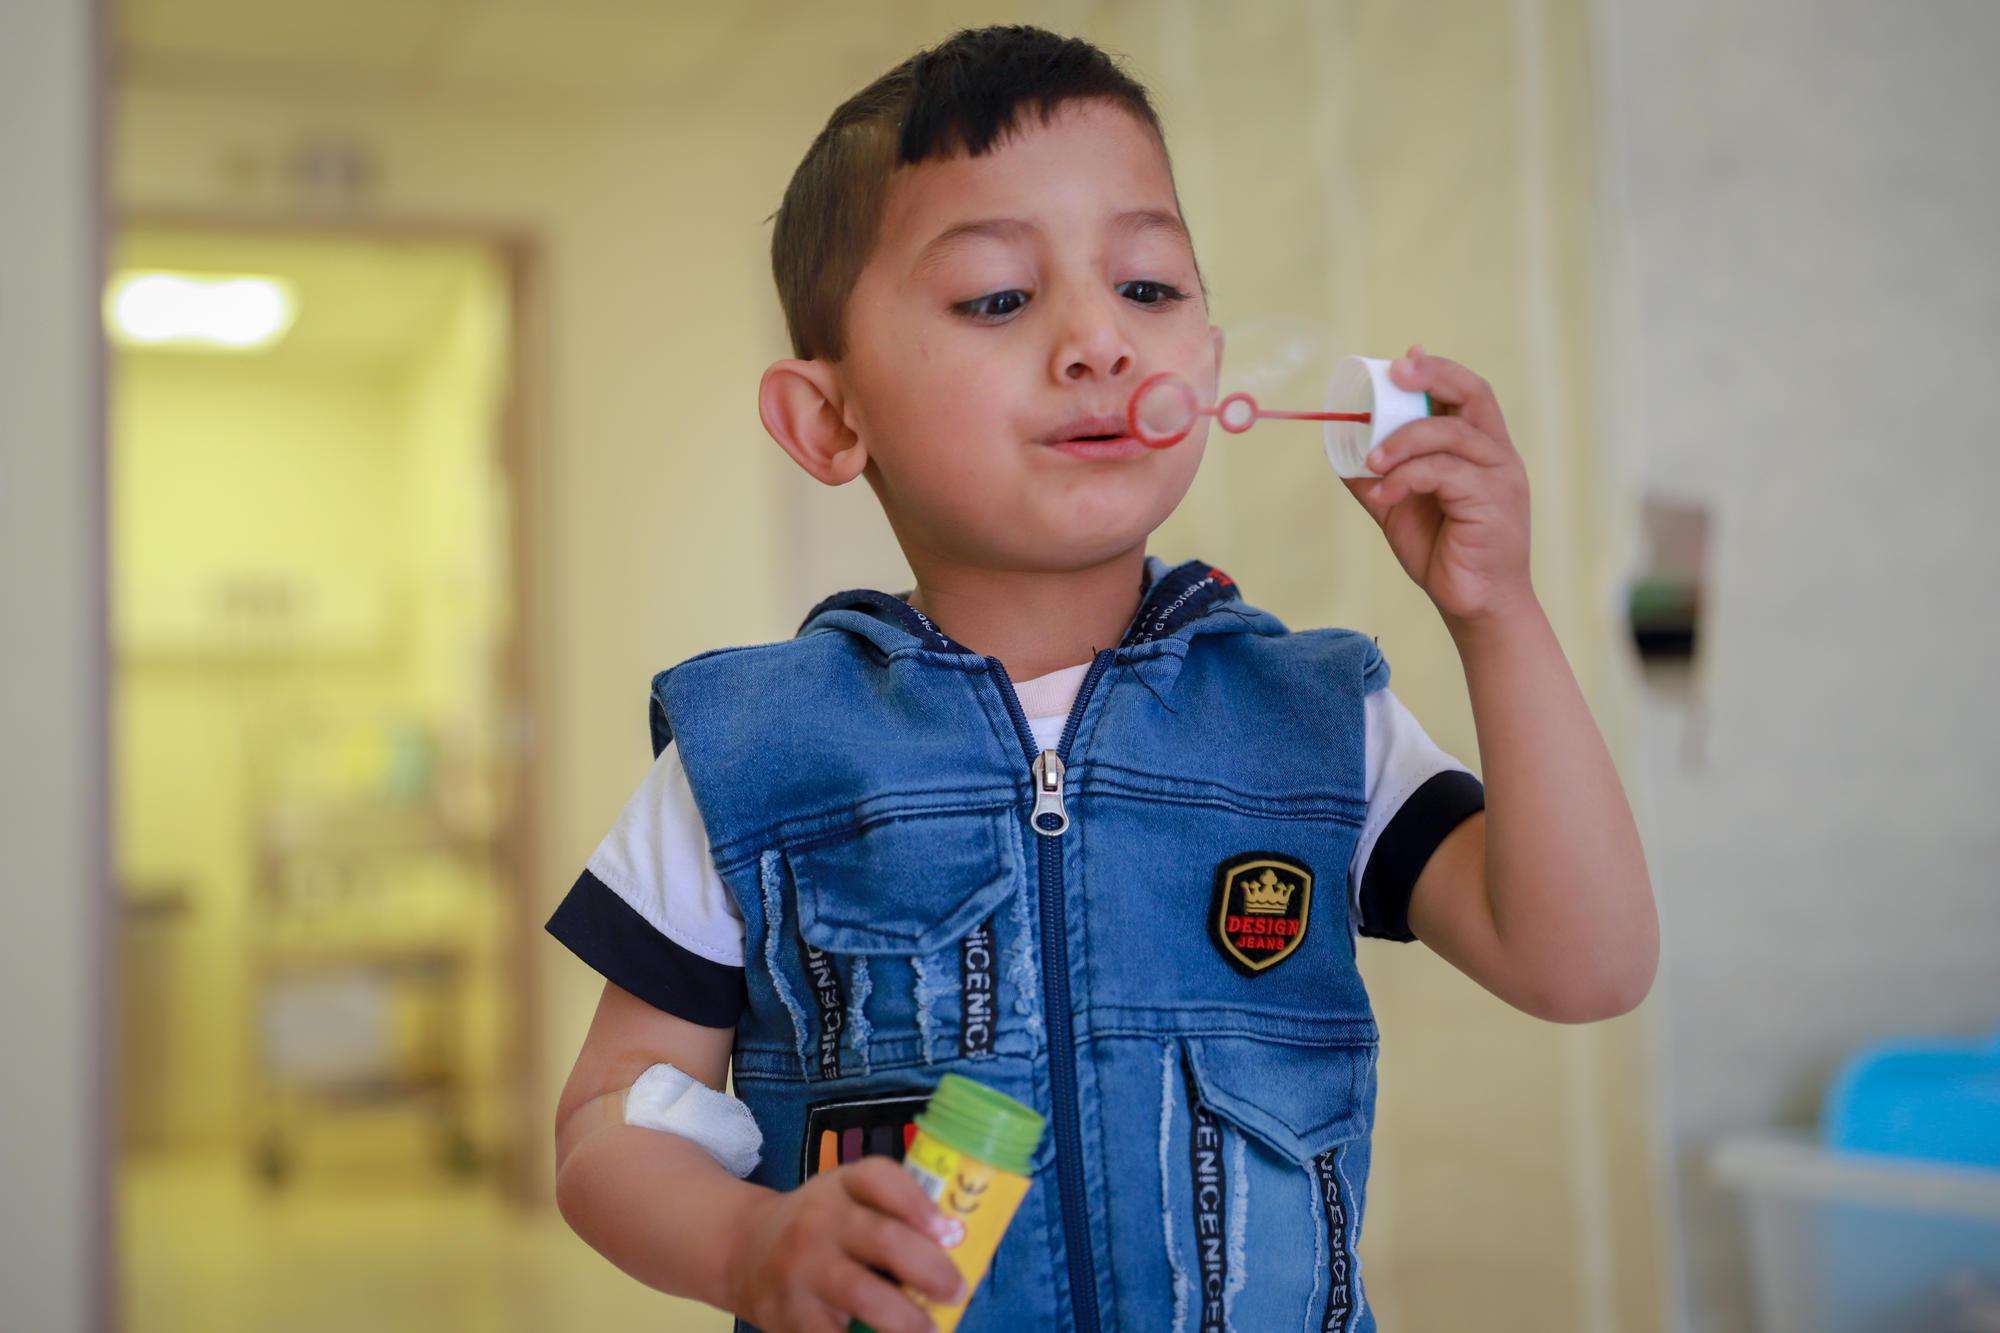 Treating thalassemia among Syrian refugees in Lebanon